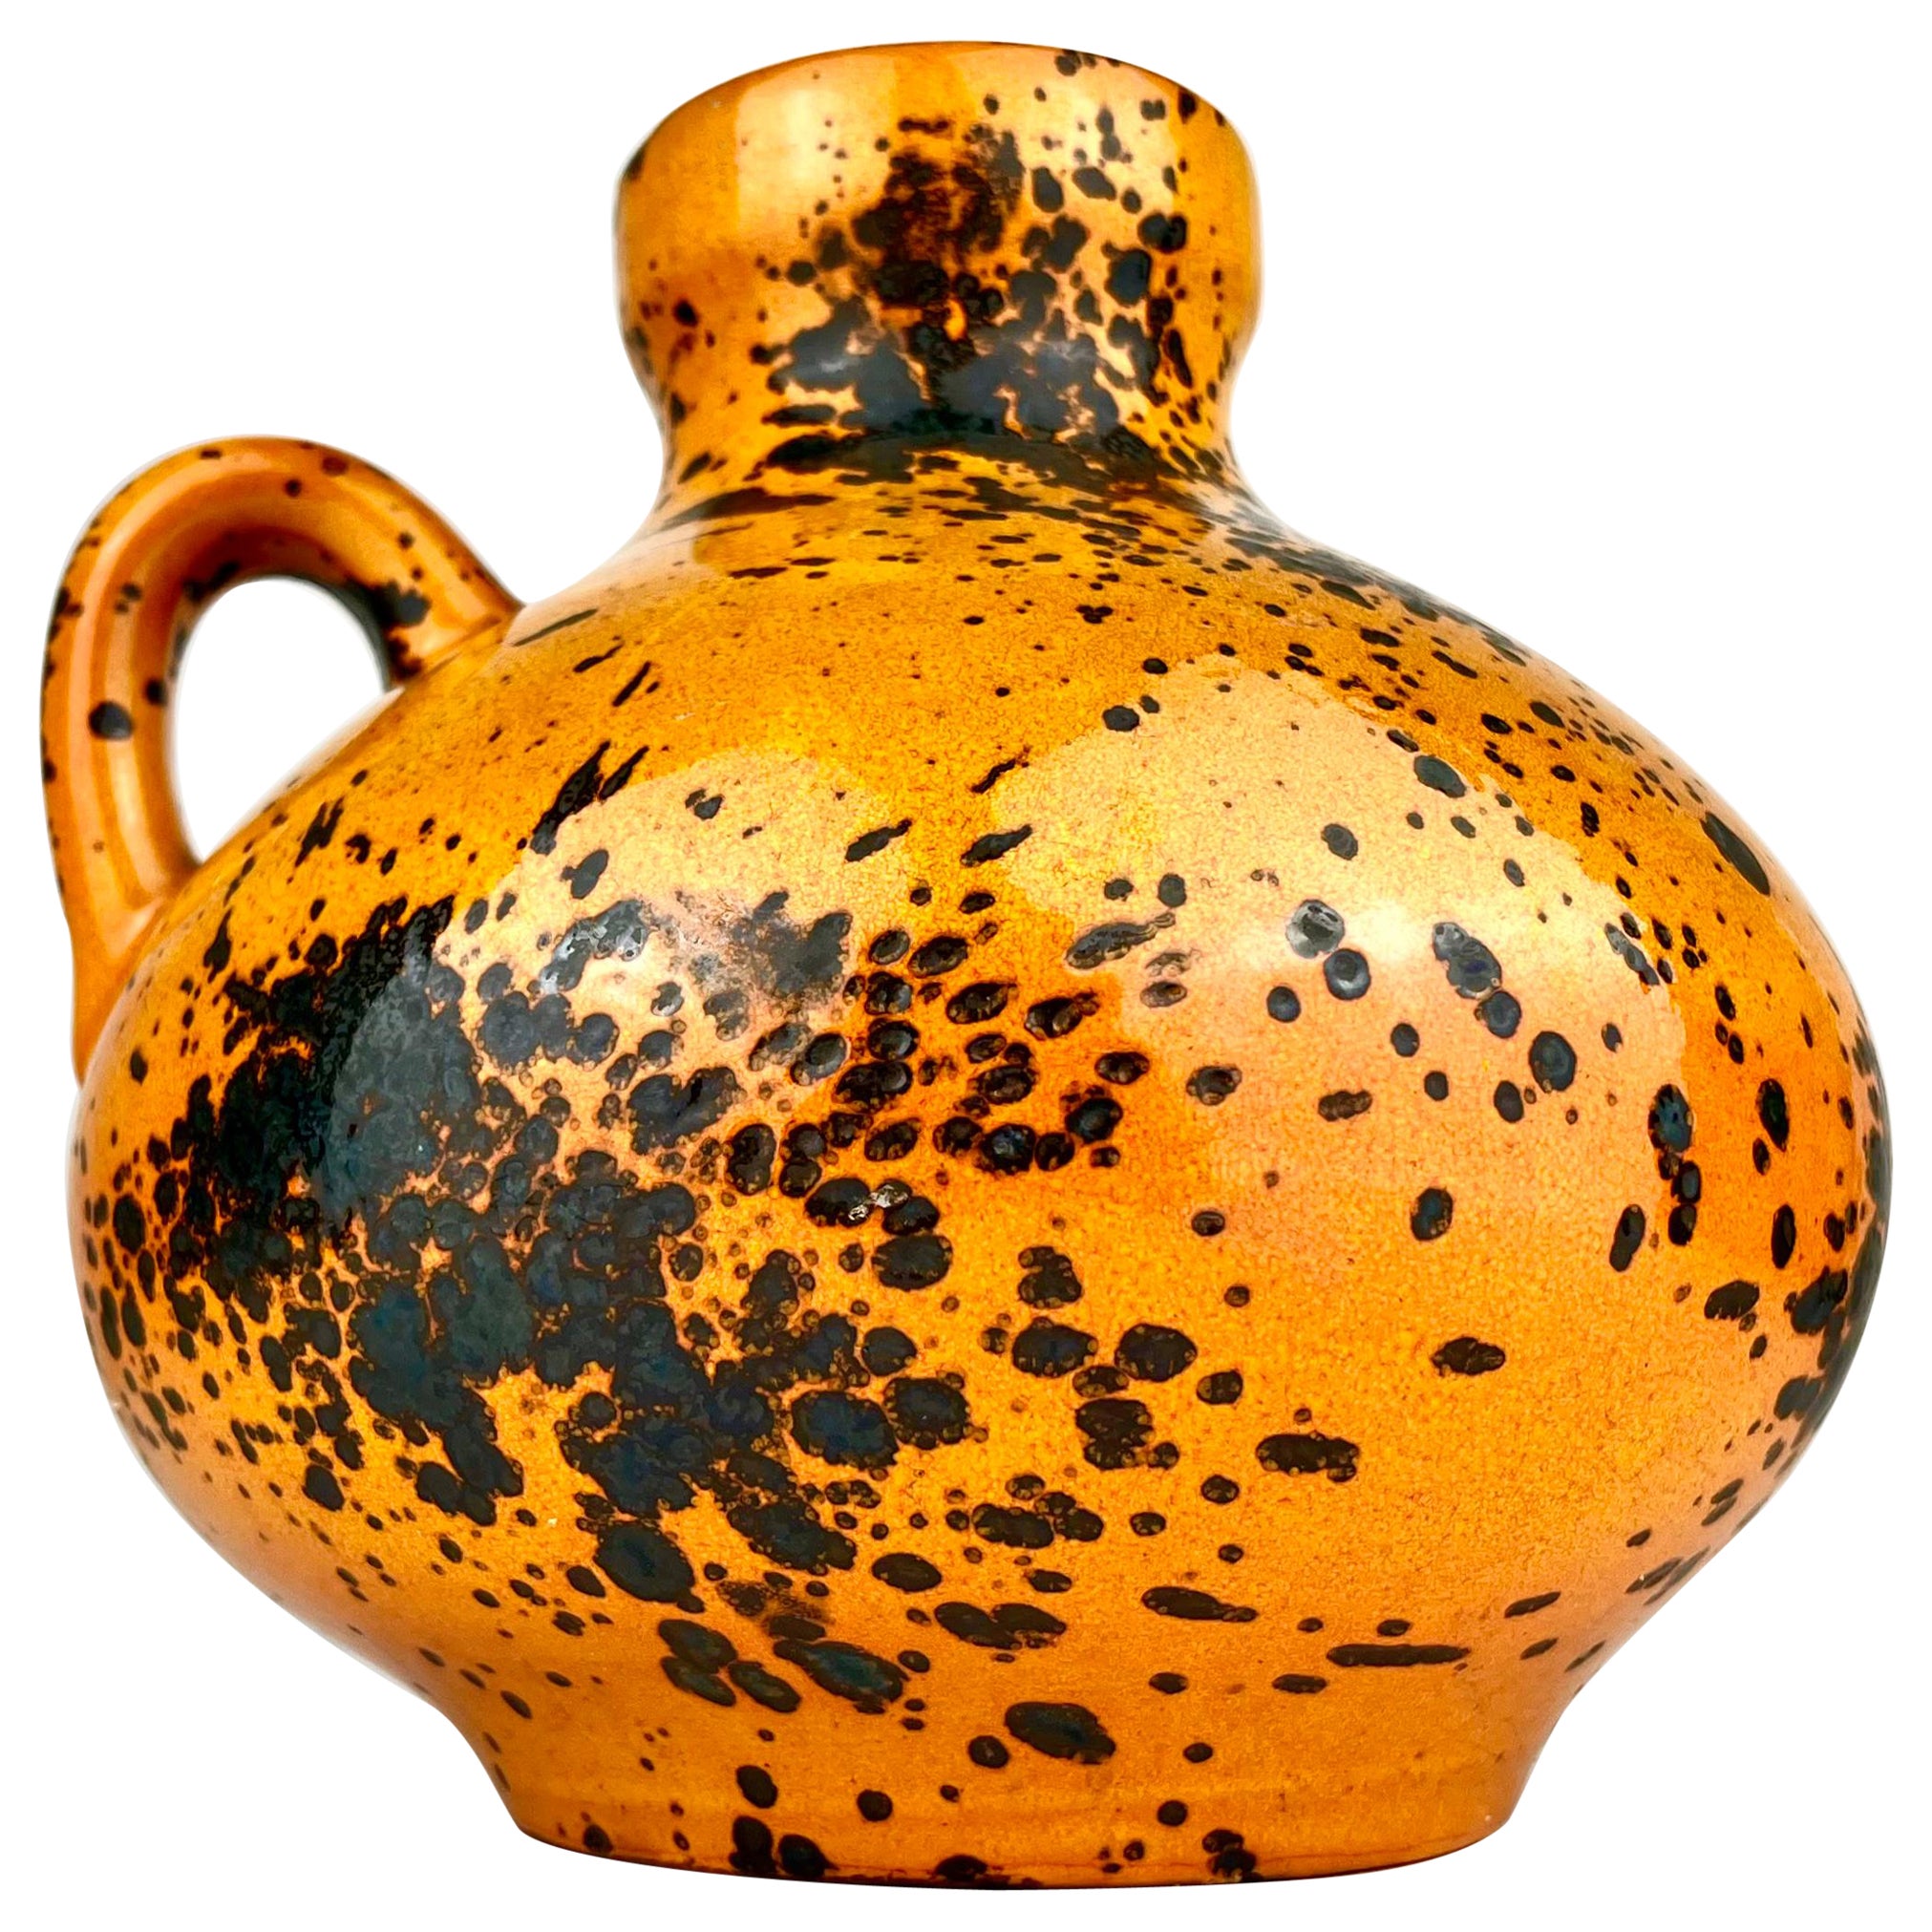 Marei Keramik 4302 West German Vase Krug 1960er Jahre Gelb West German Pottery WGC